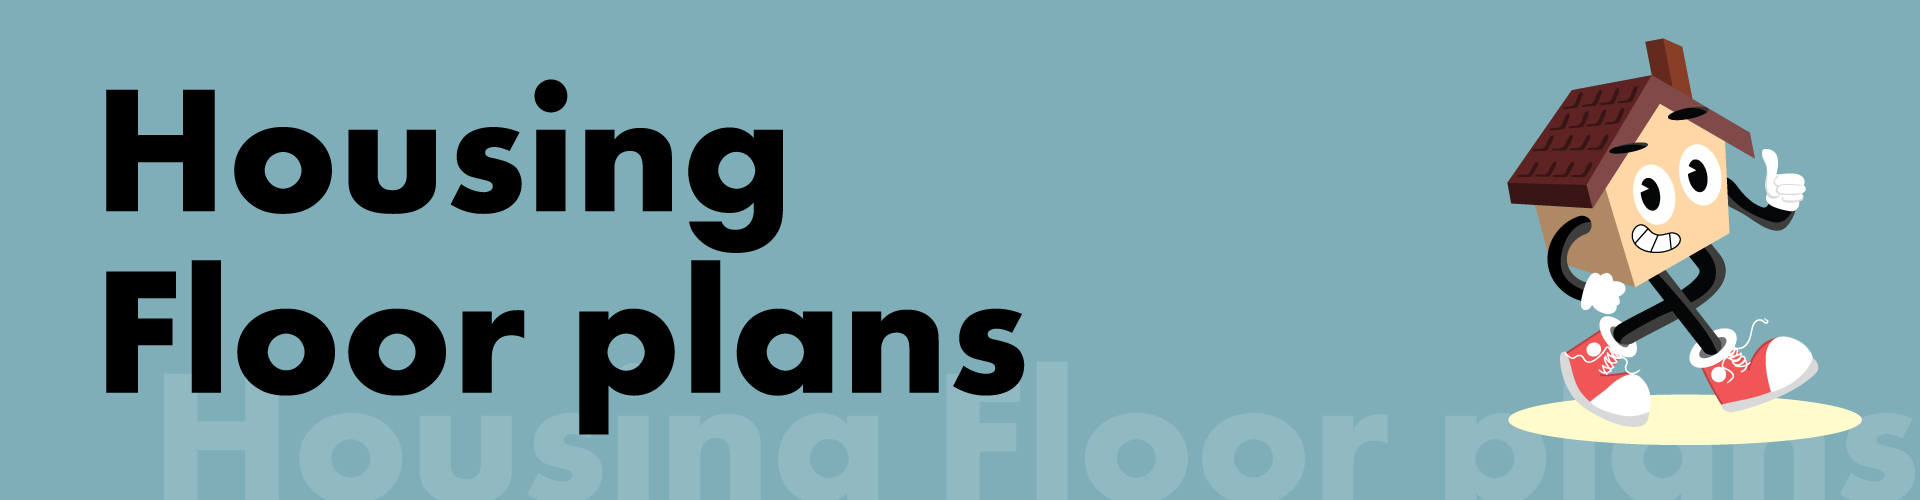 Housing Floor plans